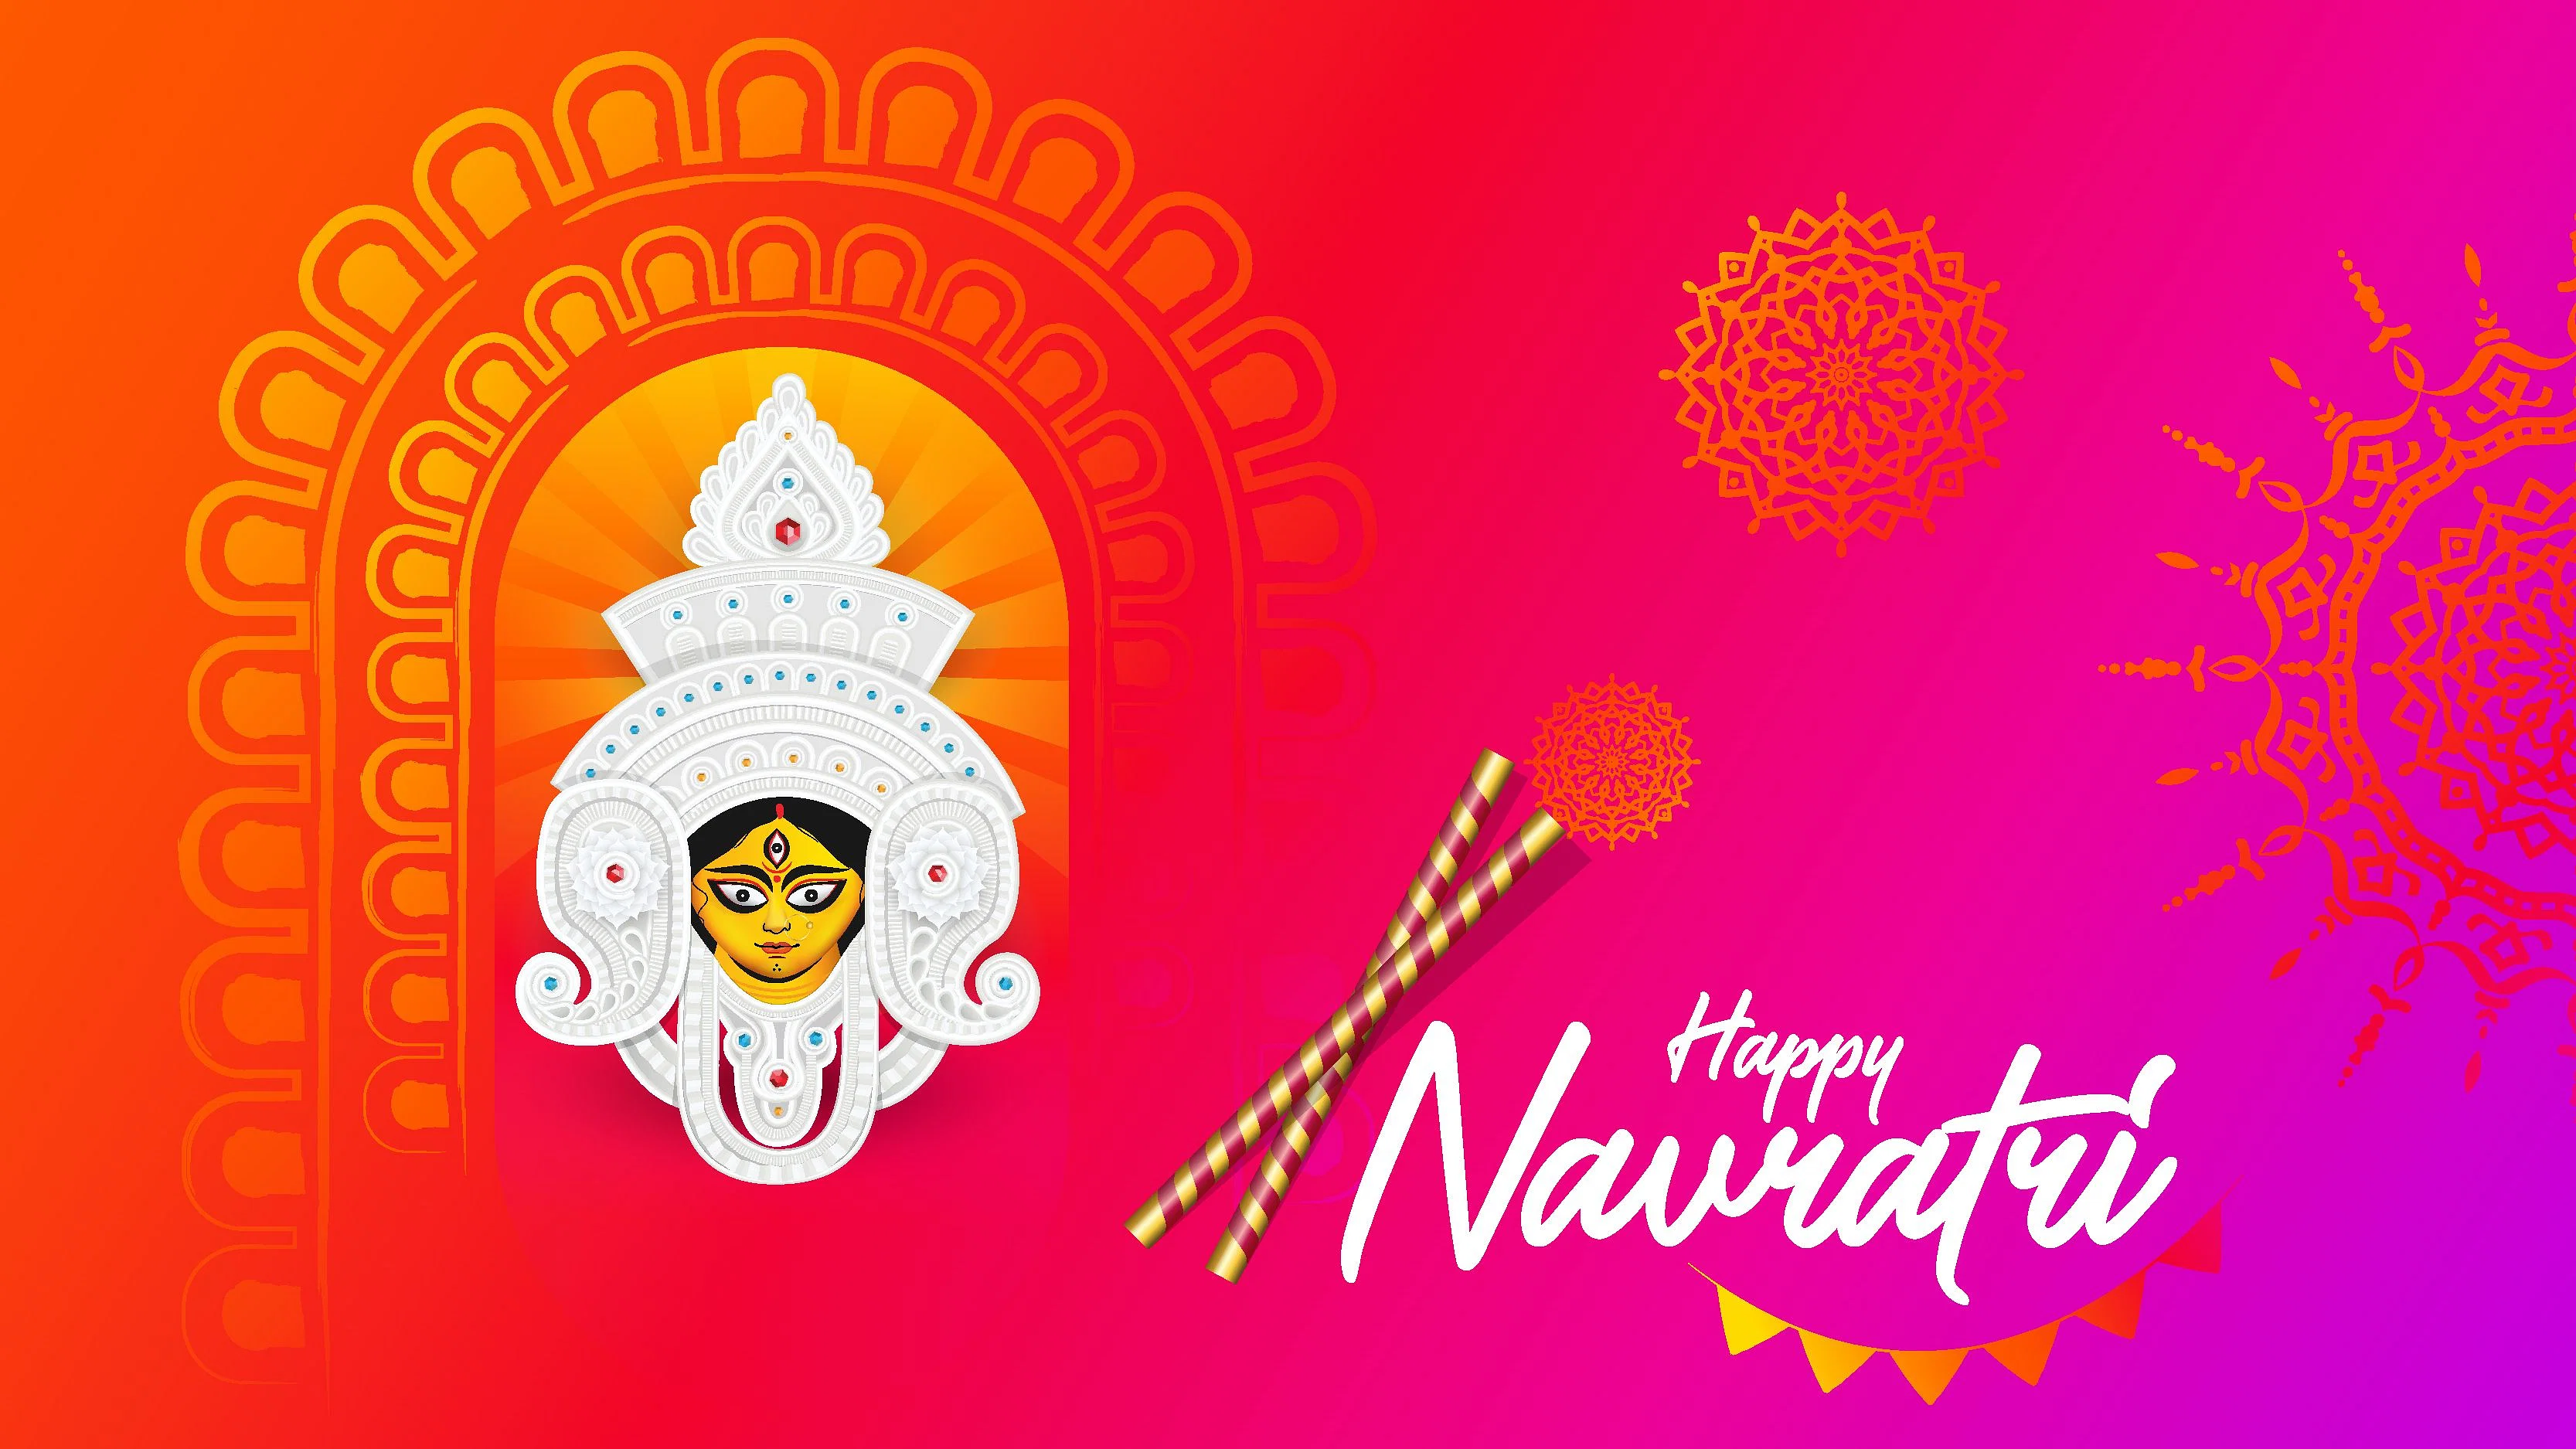 #happy-navratri, #navratri, #navratri-special, #best-navratri, #navratri-whatsapp